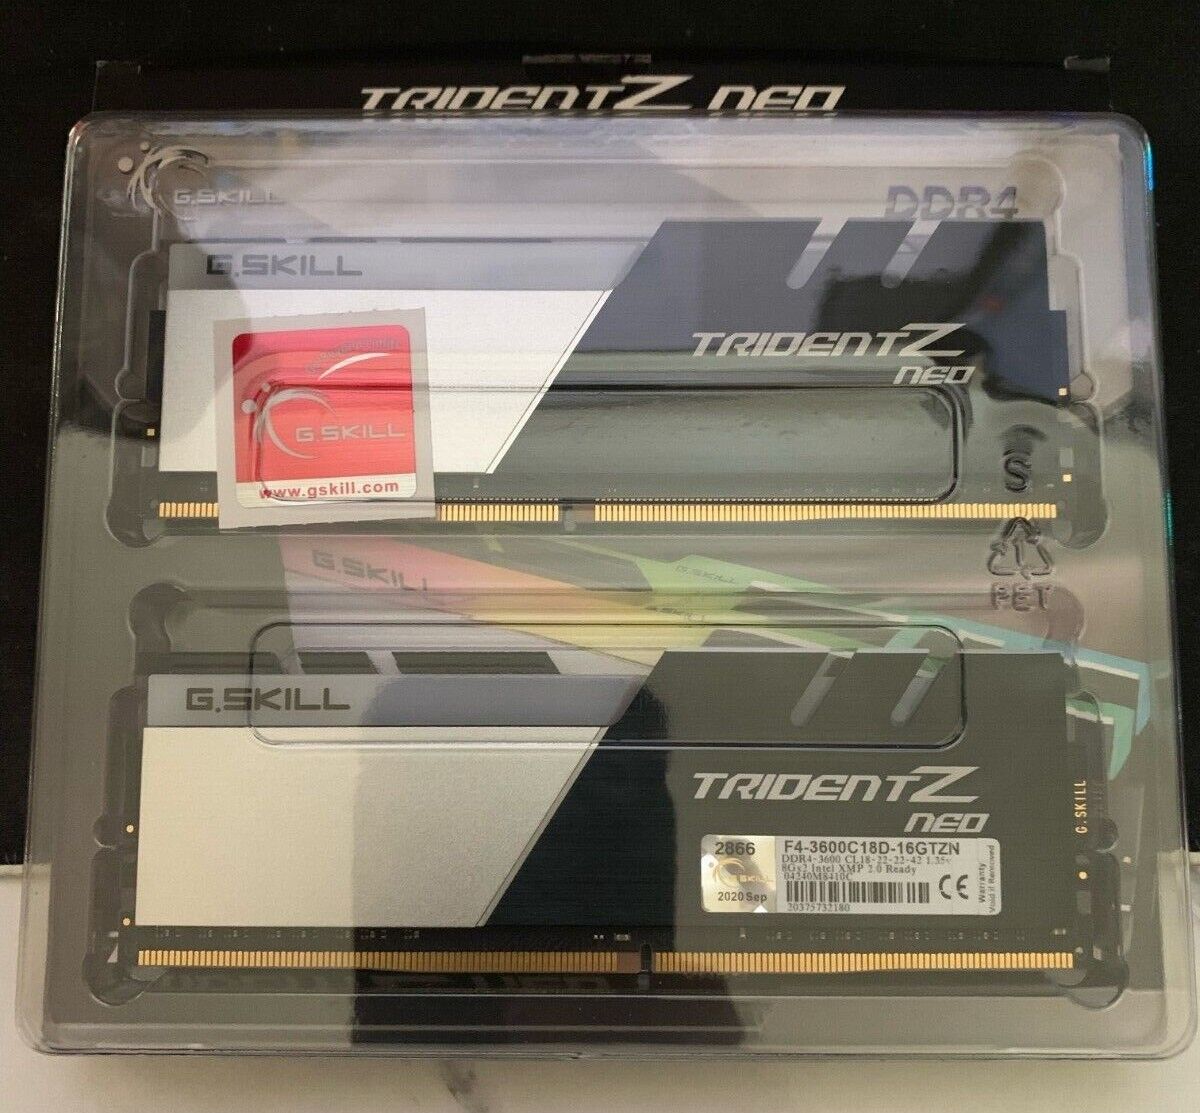 G. SKILL Trident Z Neo 16GB Memory for AMD Ryzen for sale online